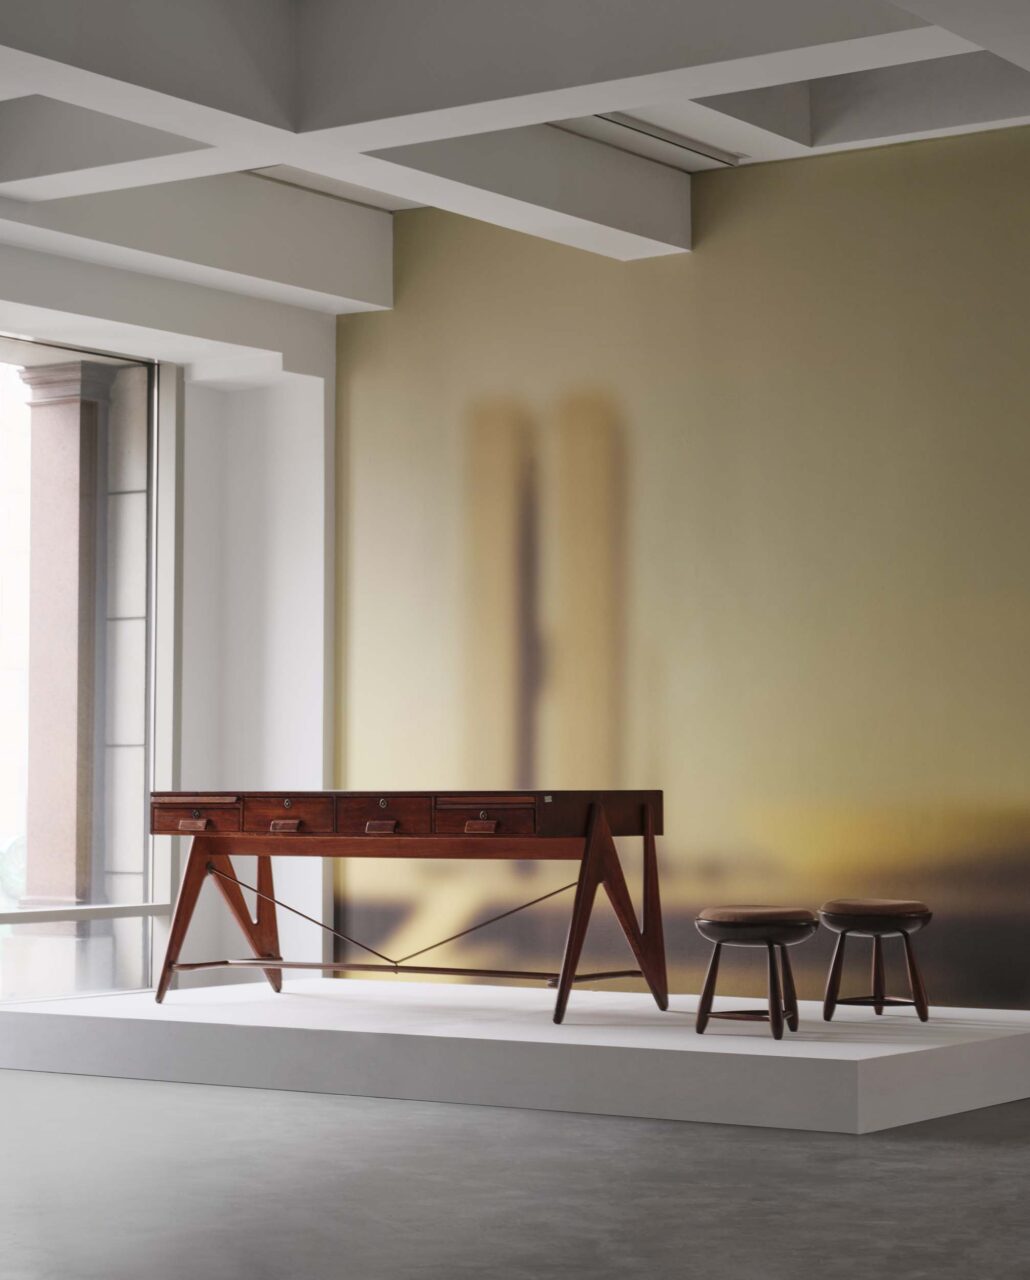 wood furniture on plinth in gallery